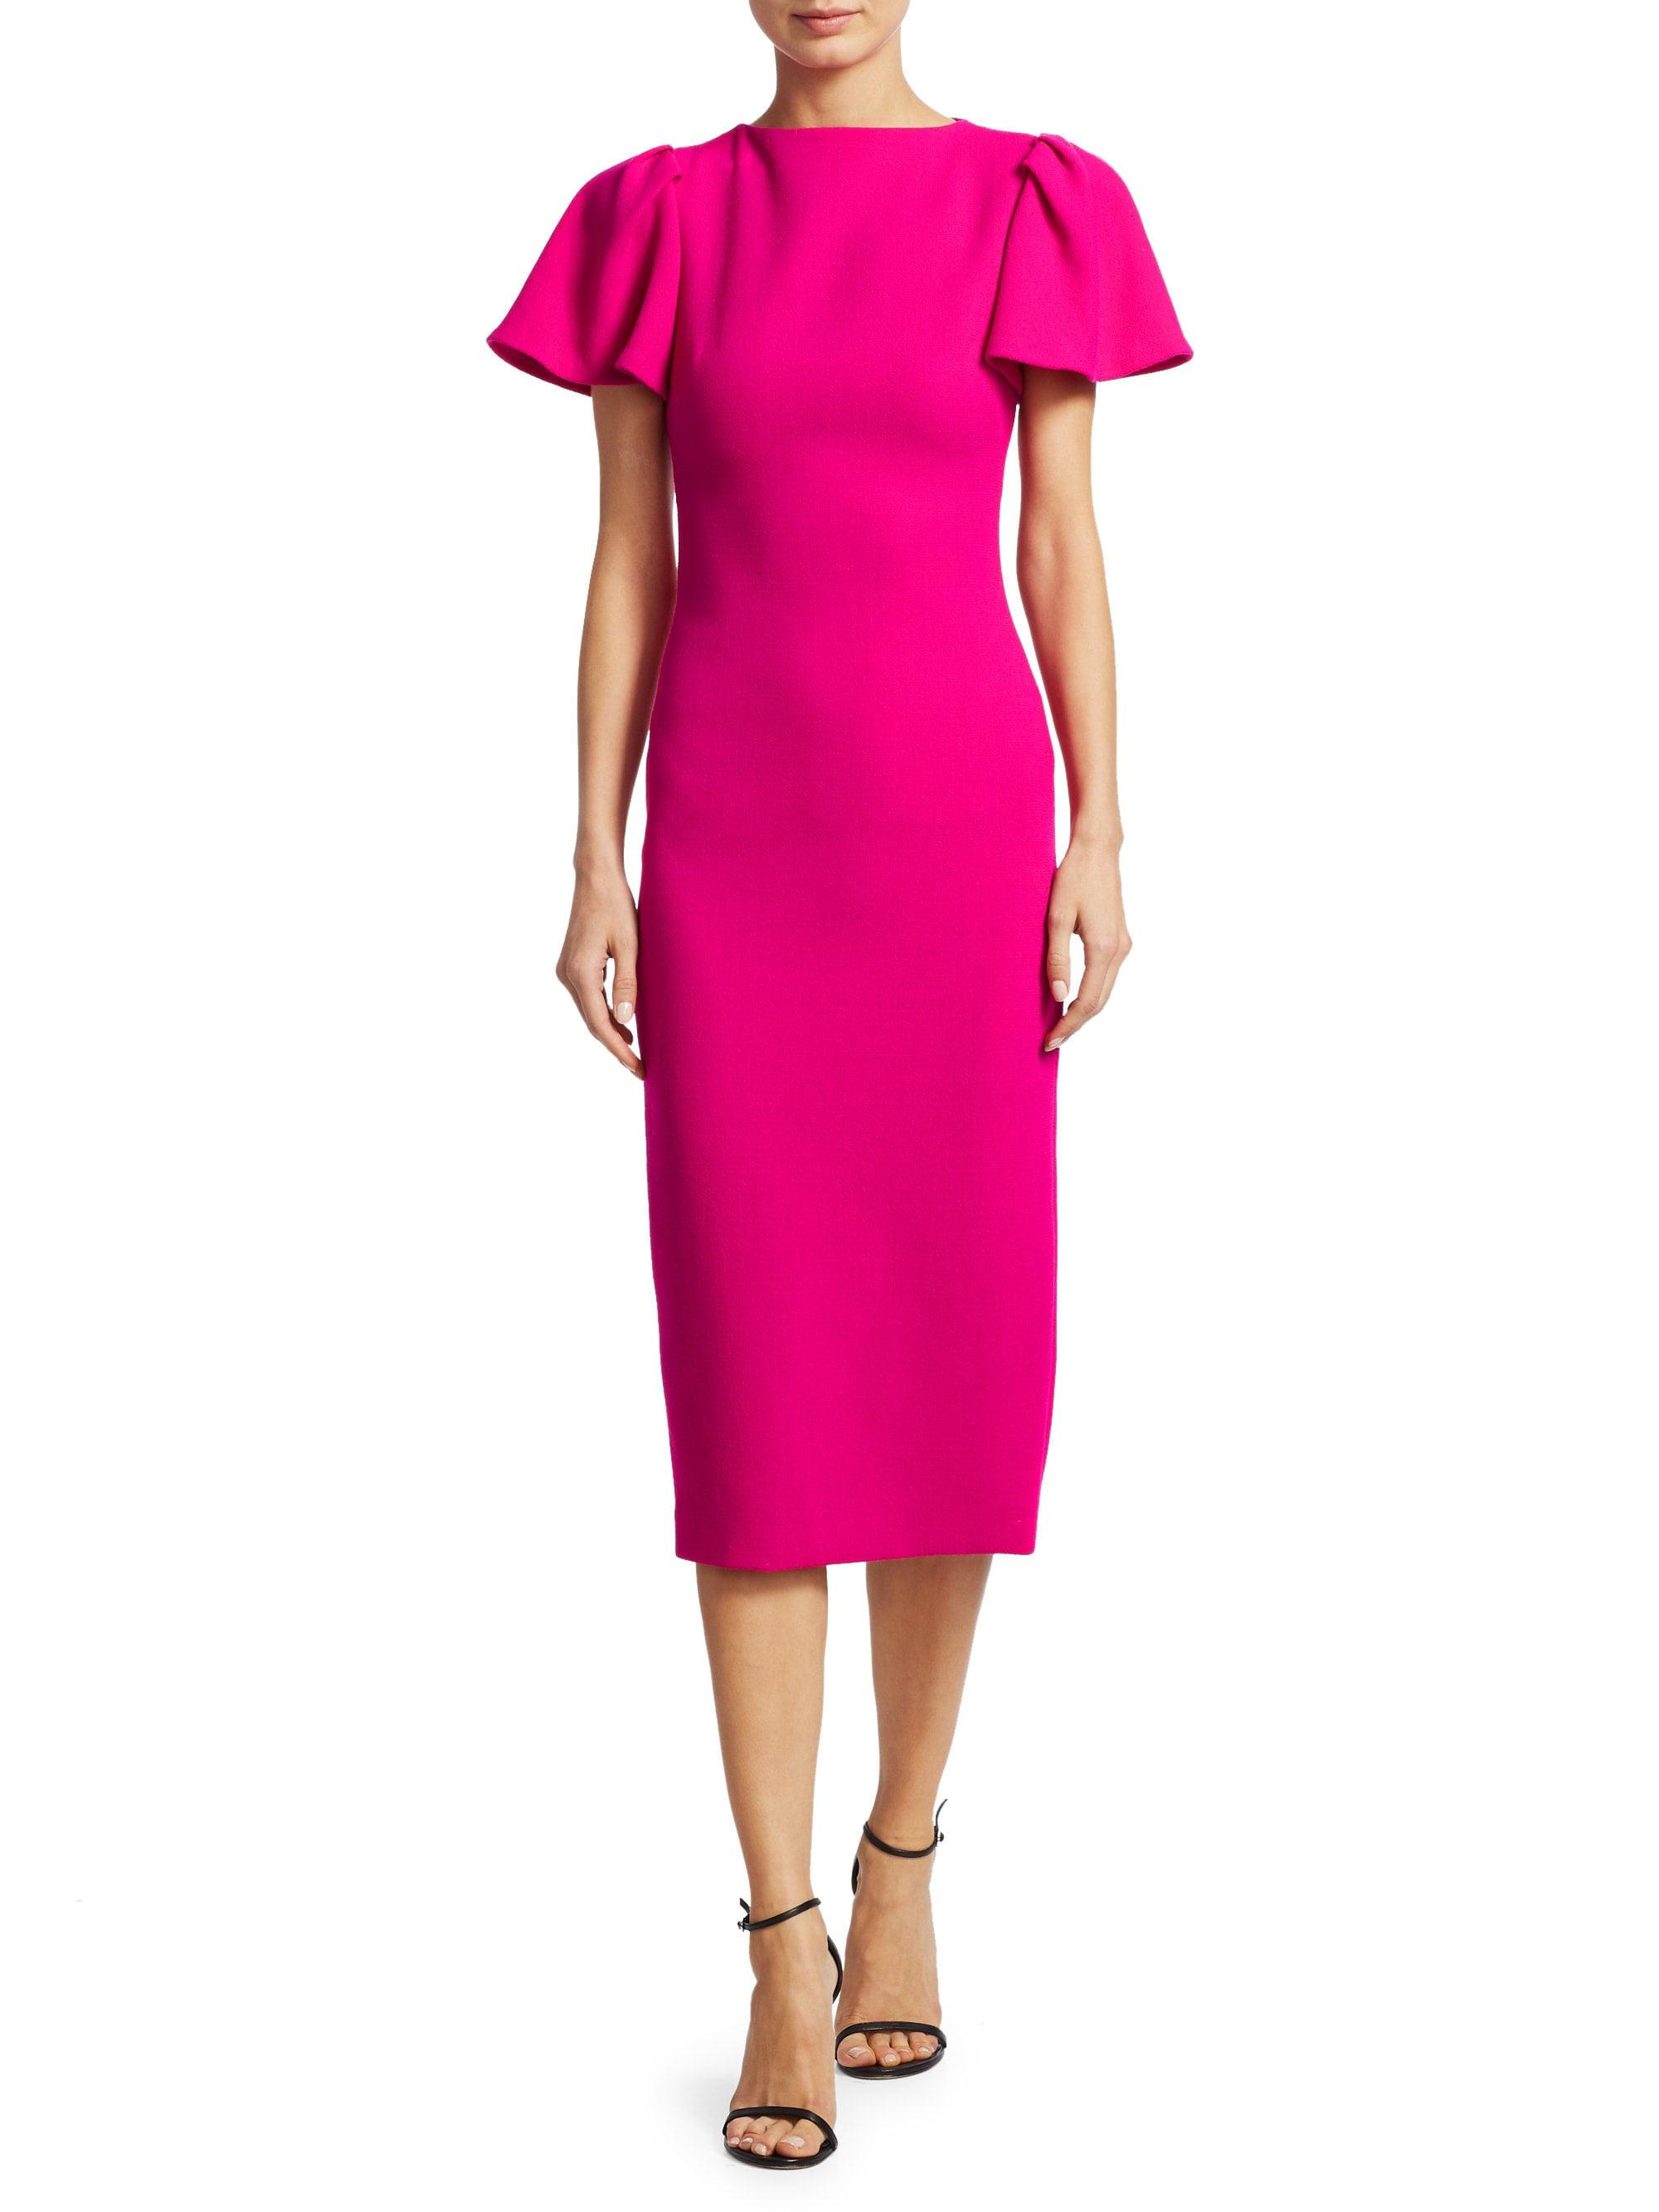 brandon maxwell pink dress